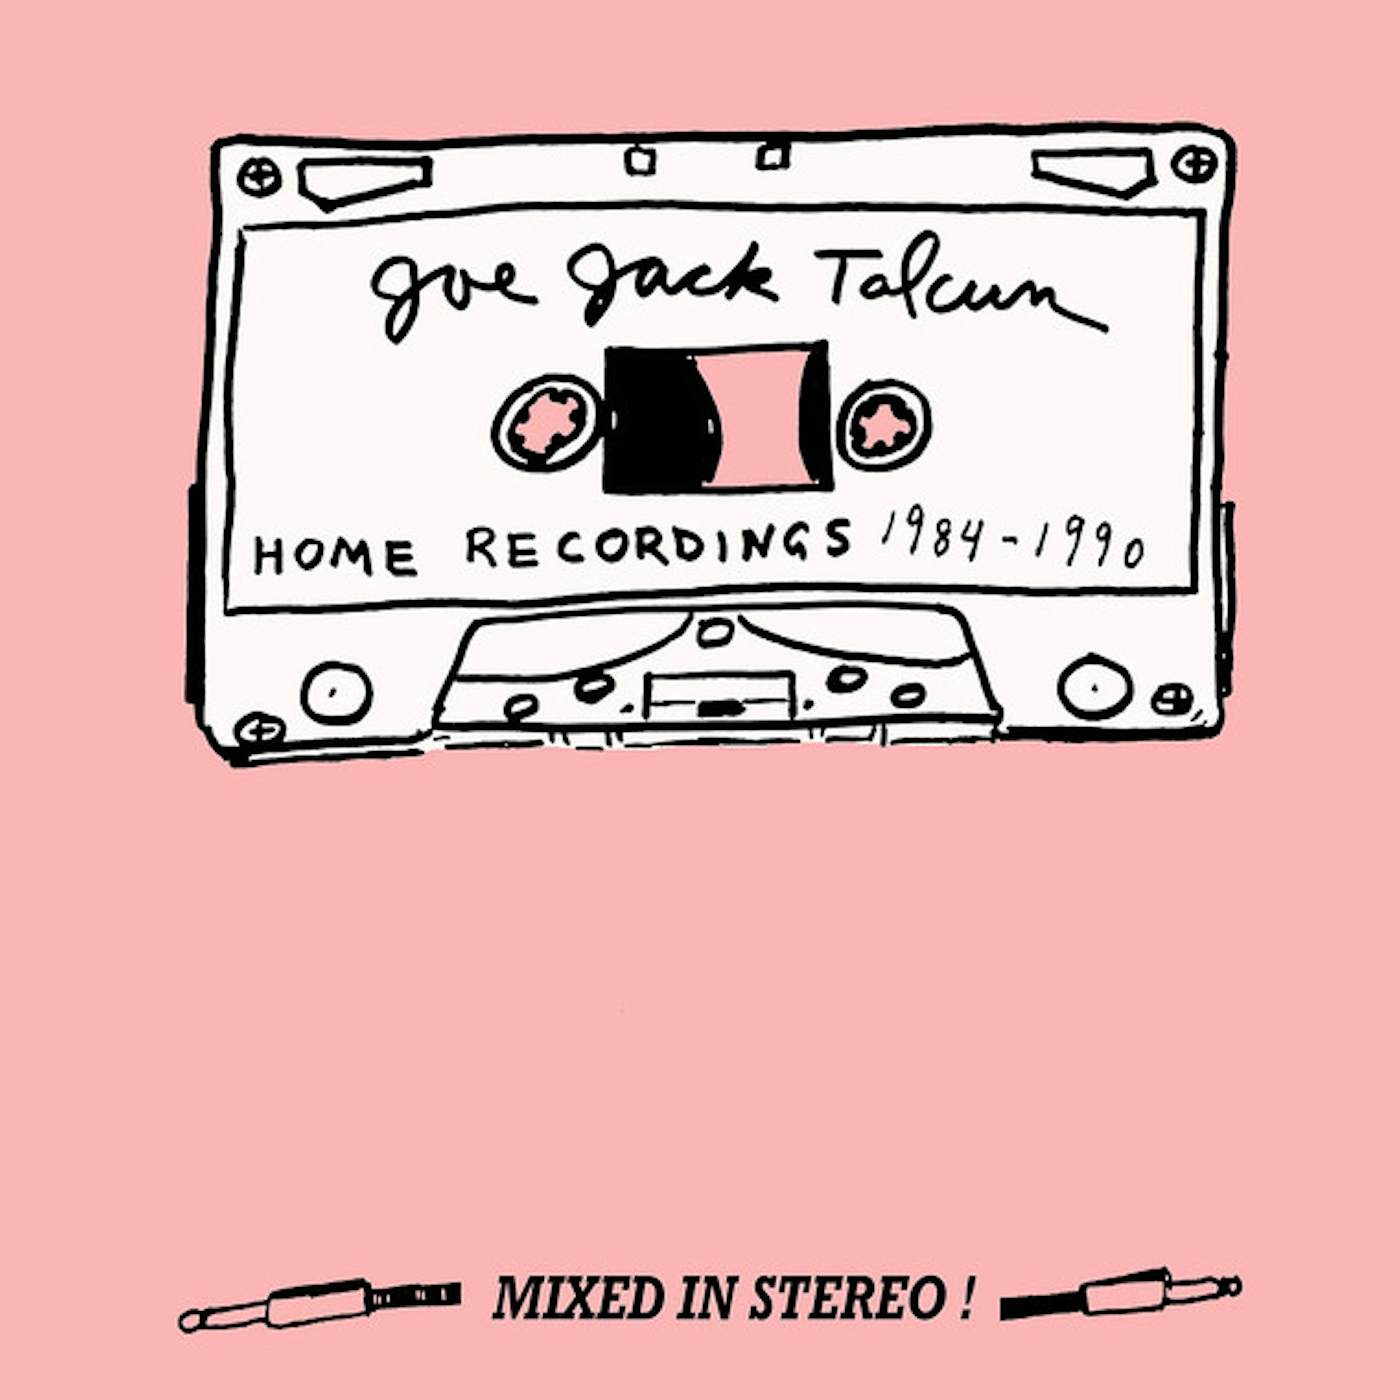 Joe Jack Talcum HOME RECORDINGS 1984-90 Vinyl Record